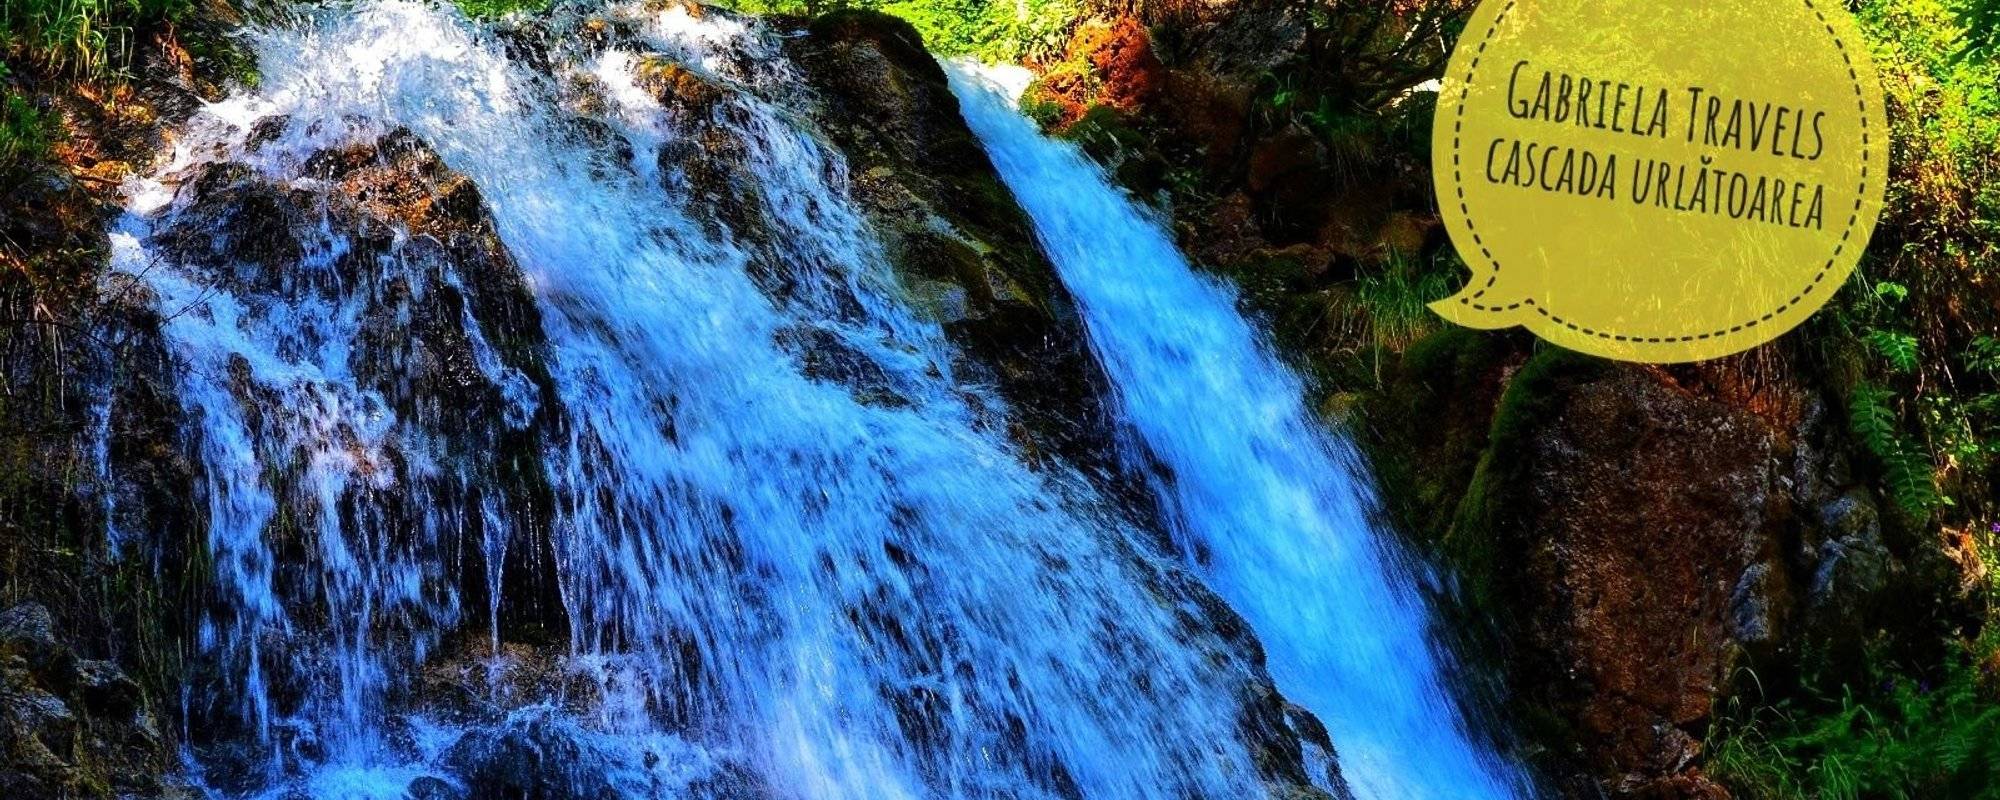 Let's travel together #66 - The Howling Waterfall (Cascada Urlatoarea)